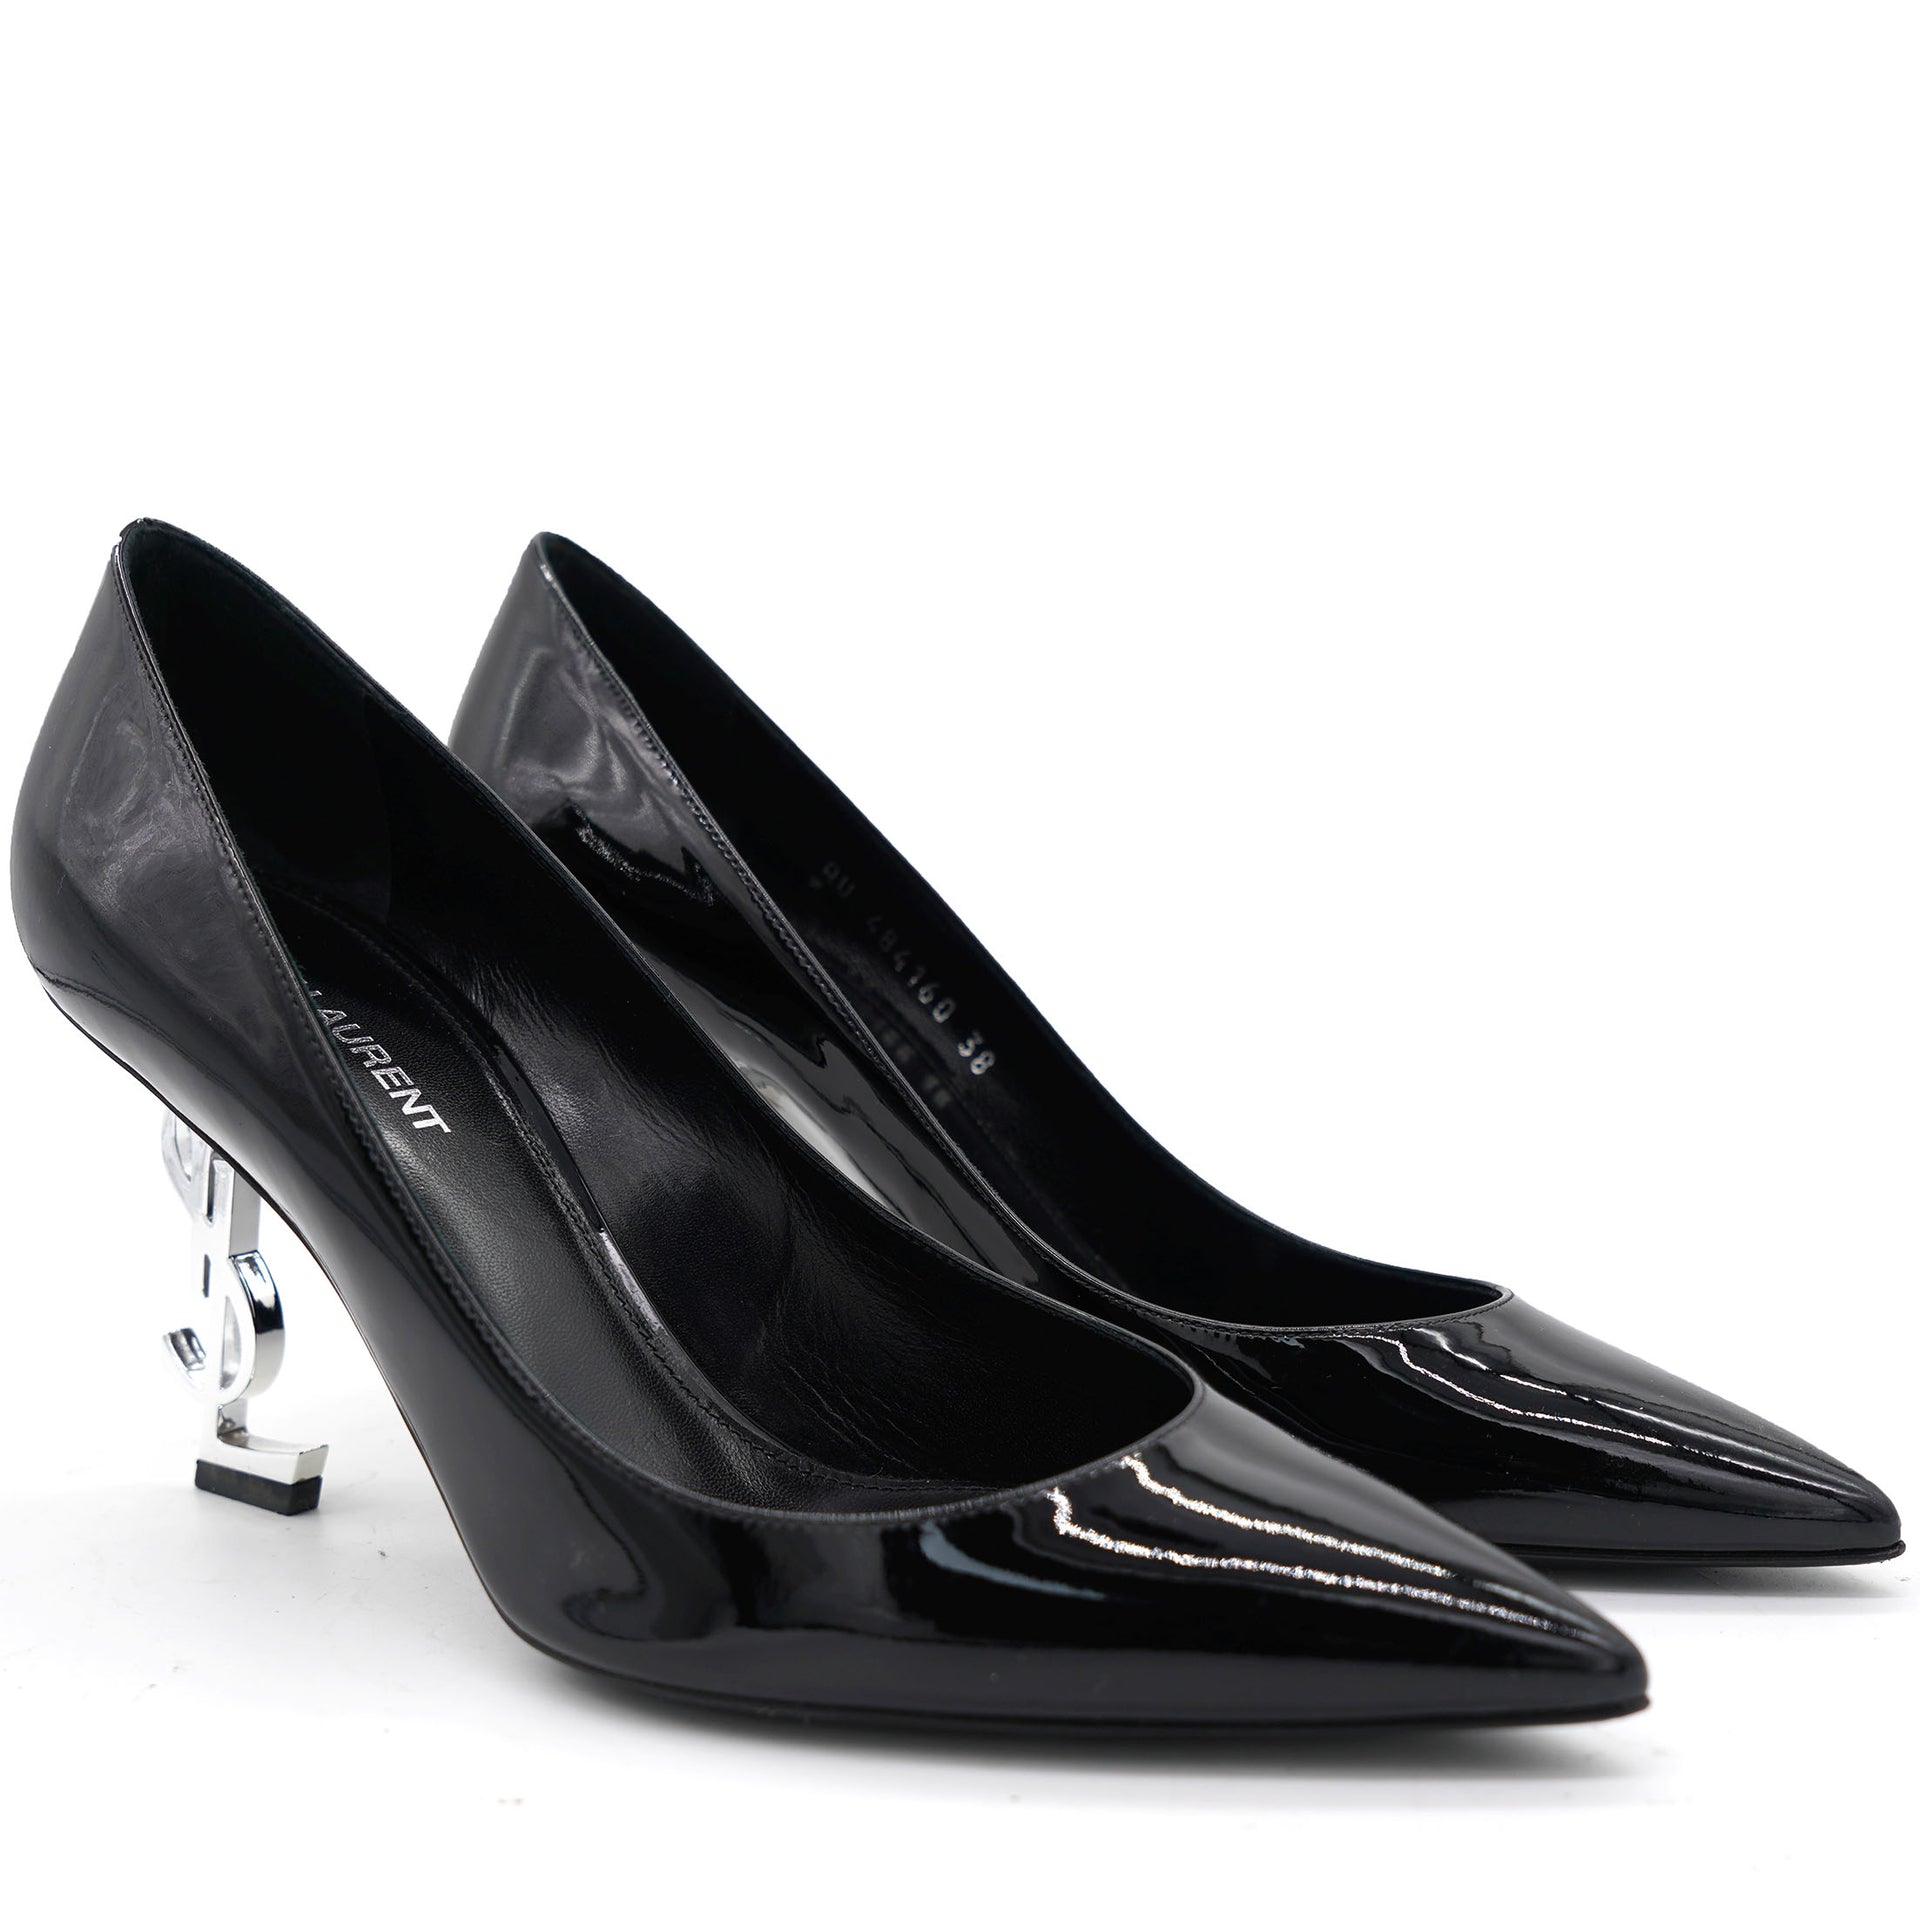 Louis Vuitton Pump Shoes High Heel 38 – STYLISHTOP